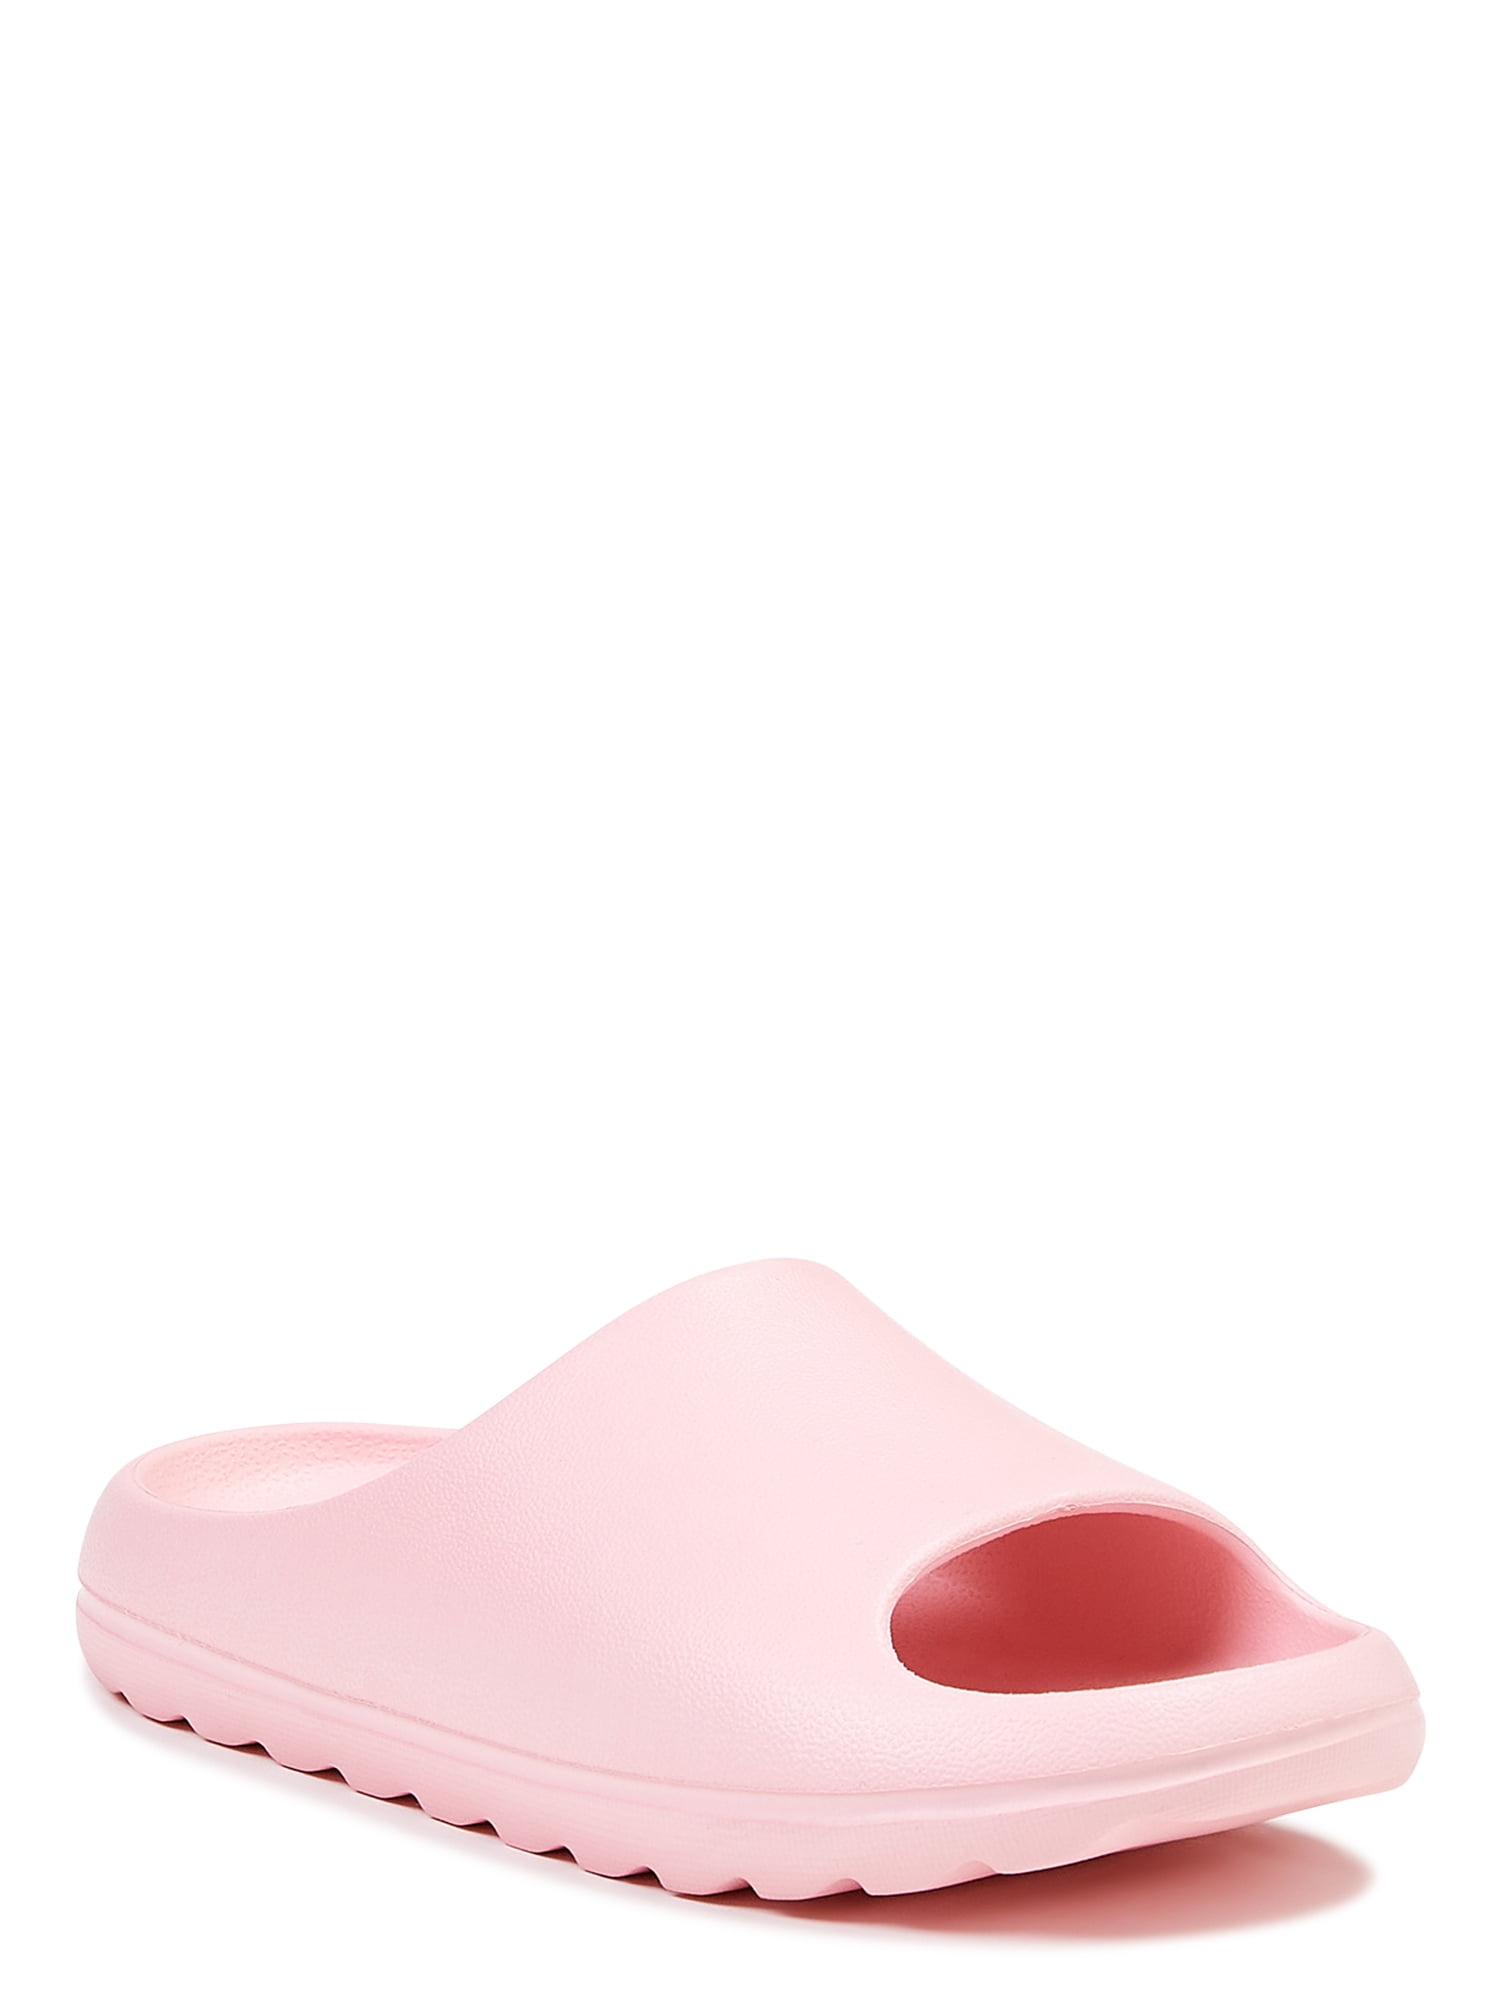 Girls Boys Stripe Beach Sliders Slip on Sandals Unisex Shoes Child Sizes 13 to 6 